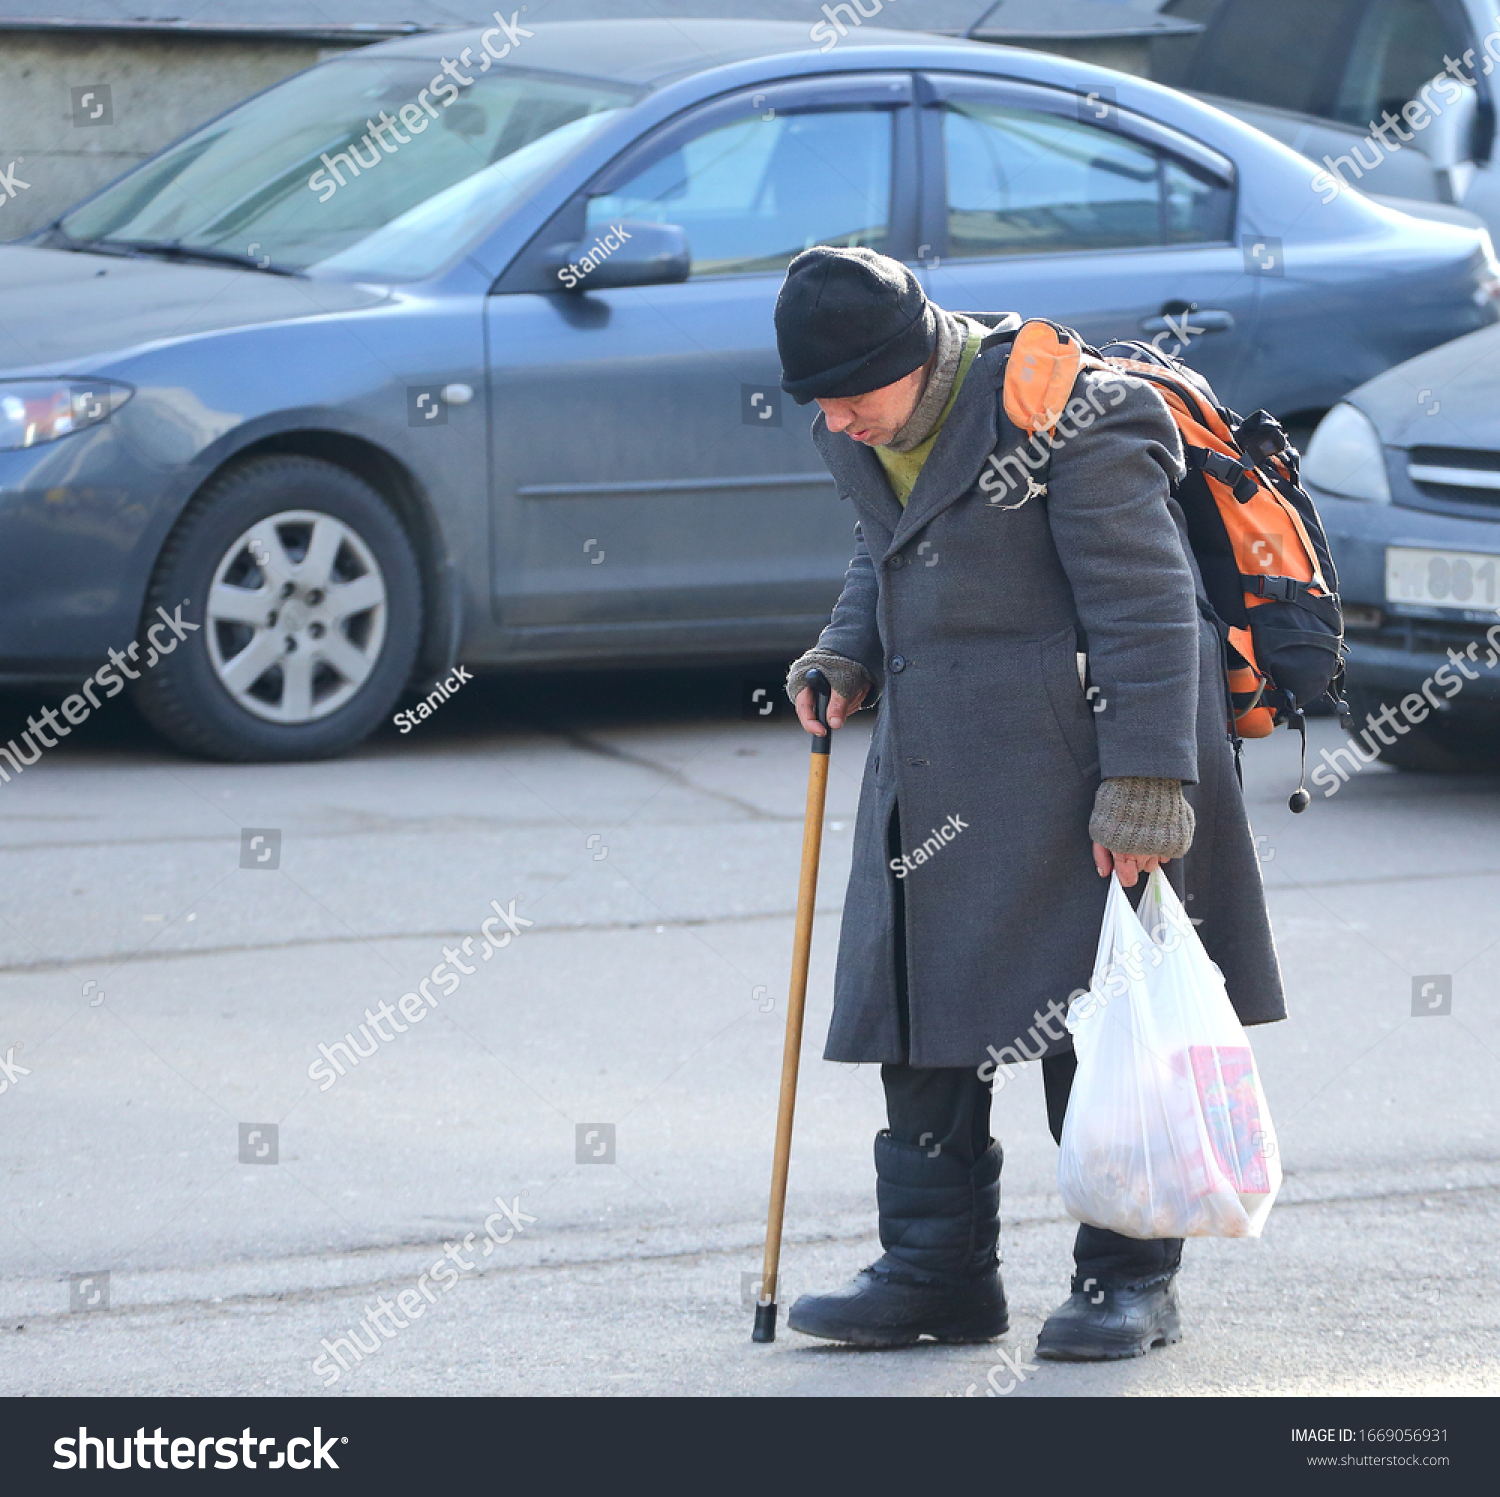 A homeless tramp with a stick walks through the Parking lot, Bolshevikov Avenue, Saint Petersburg, Russia, March 2020 #1669056931